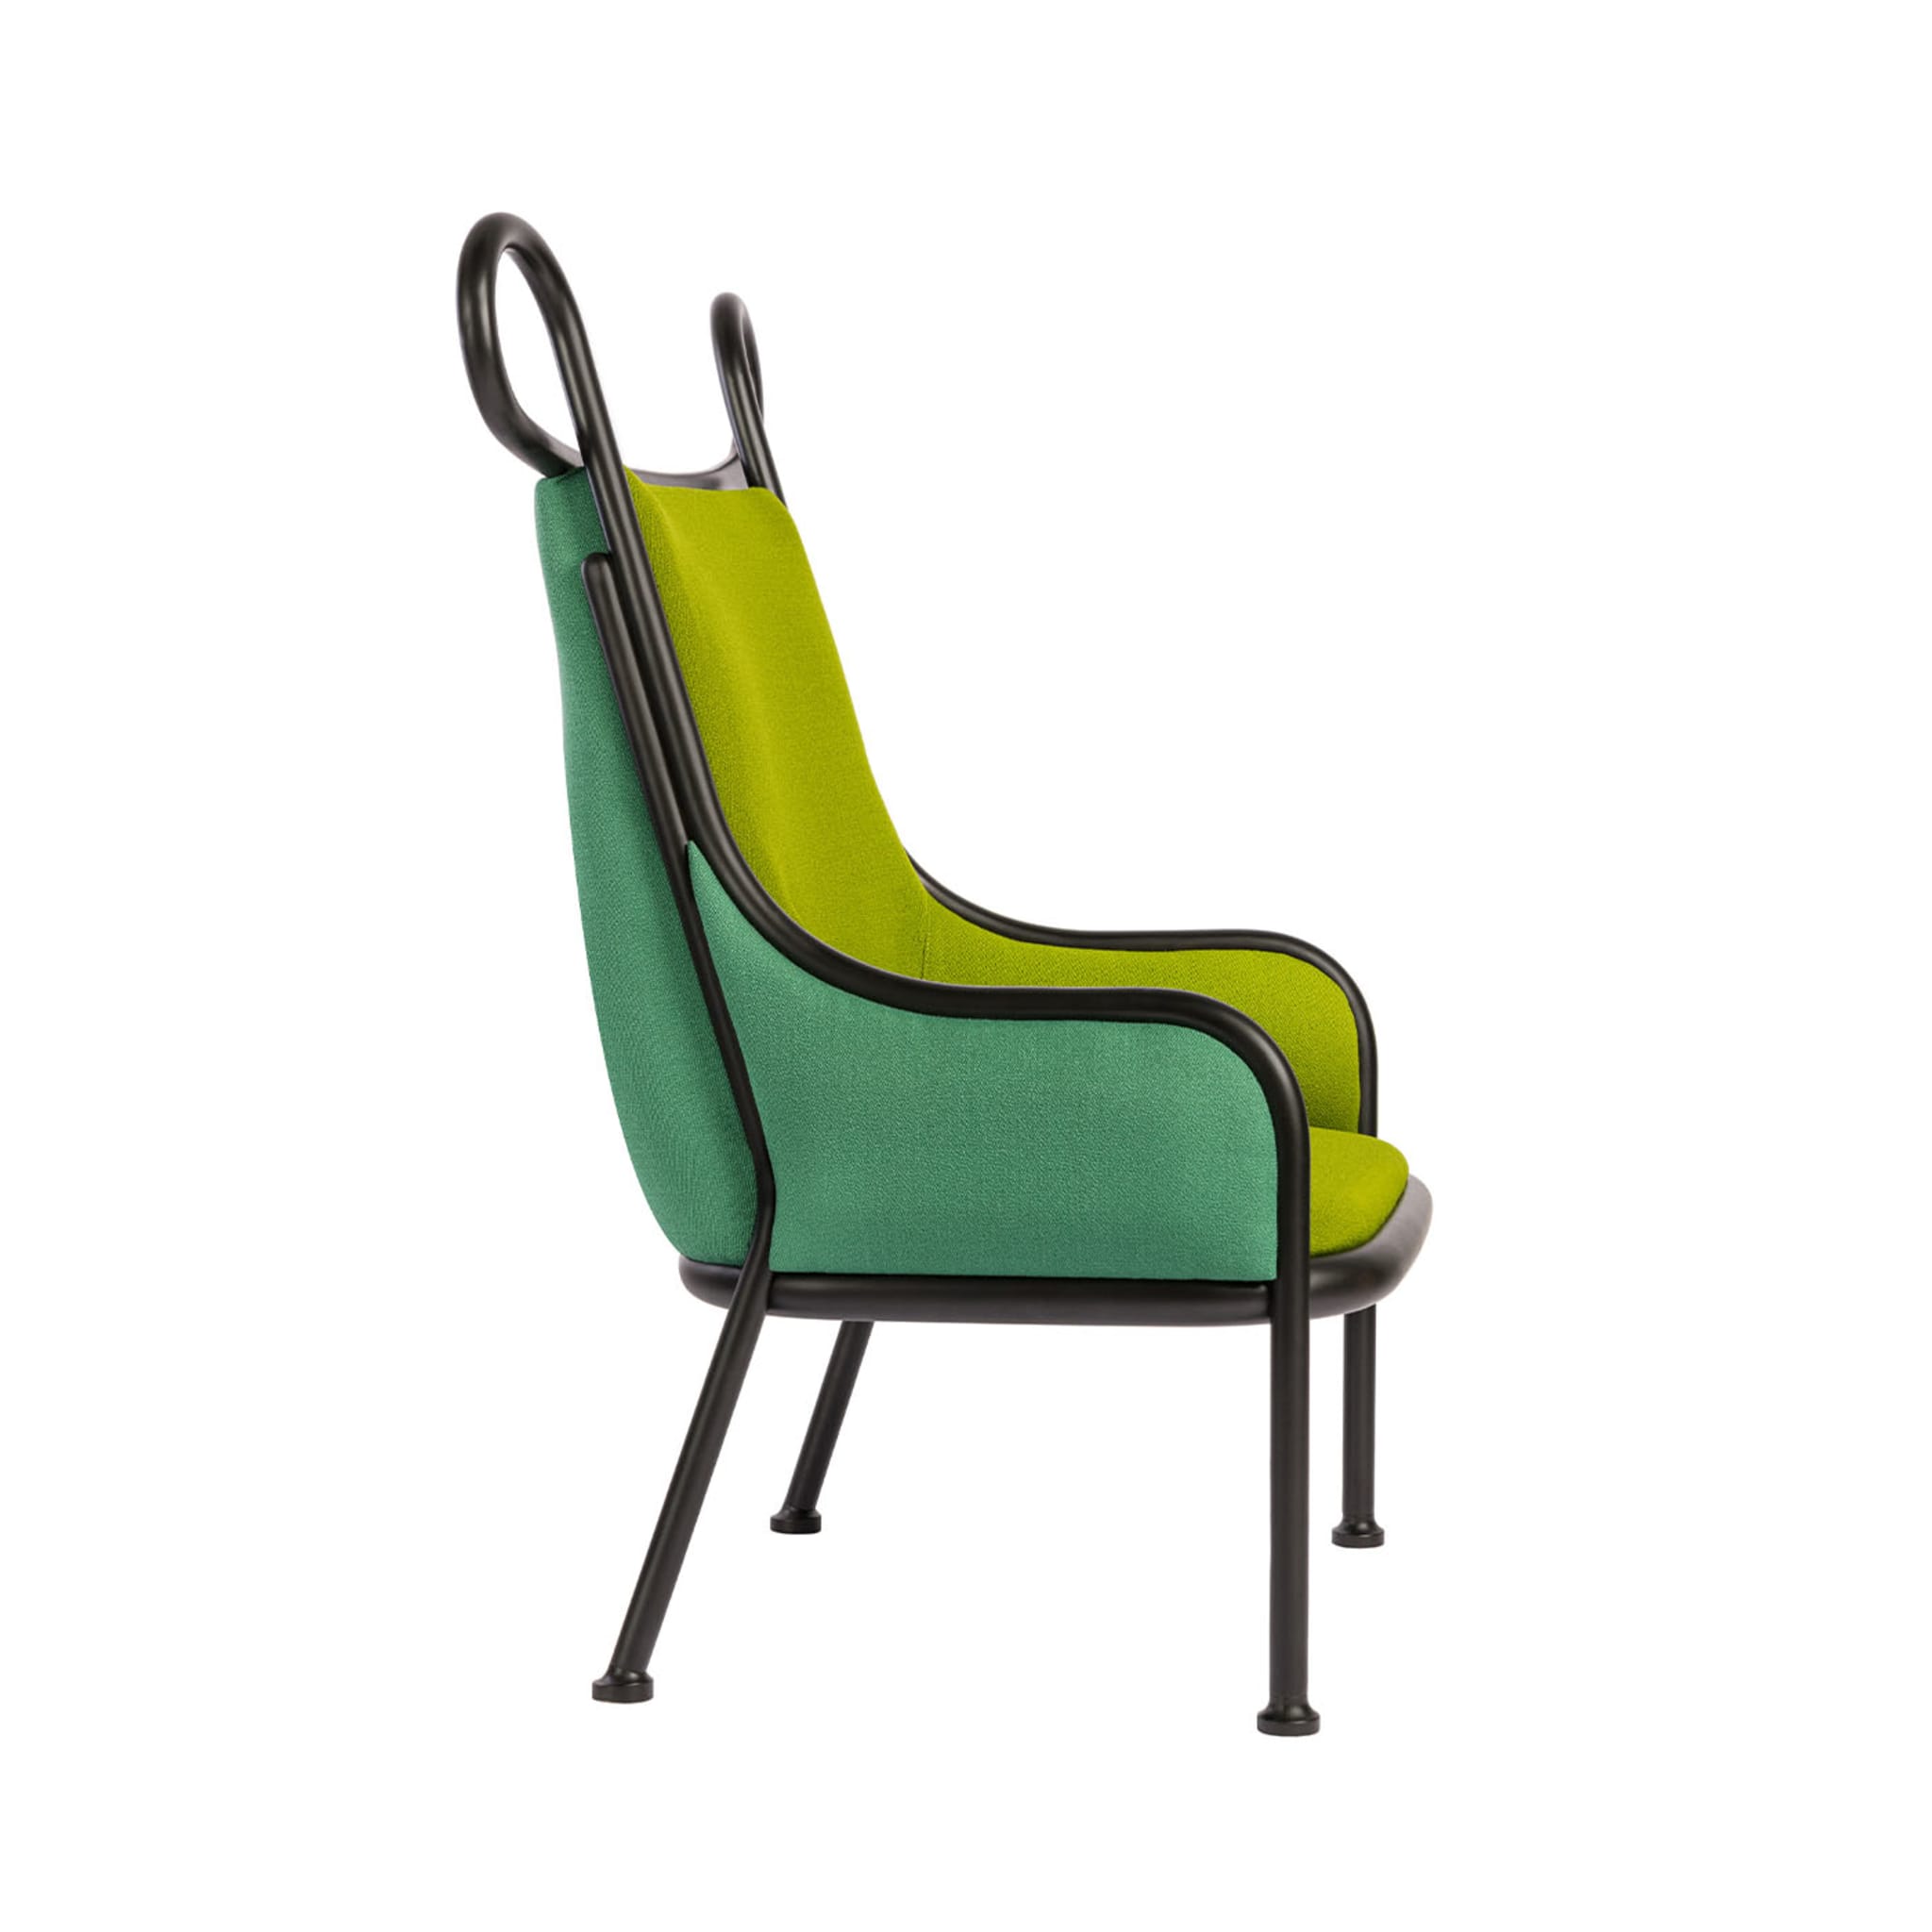 Mickey Green Lounge Chair by India Mahdavi - Alternative view 2